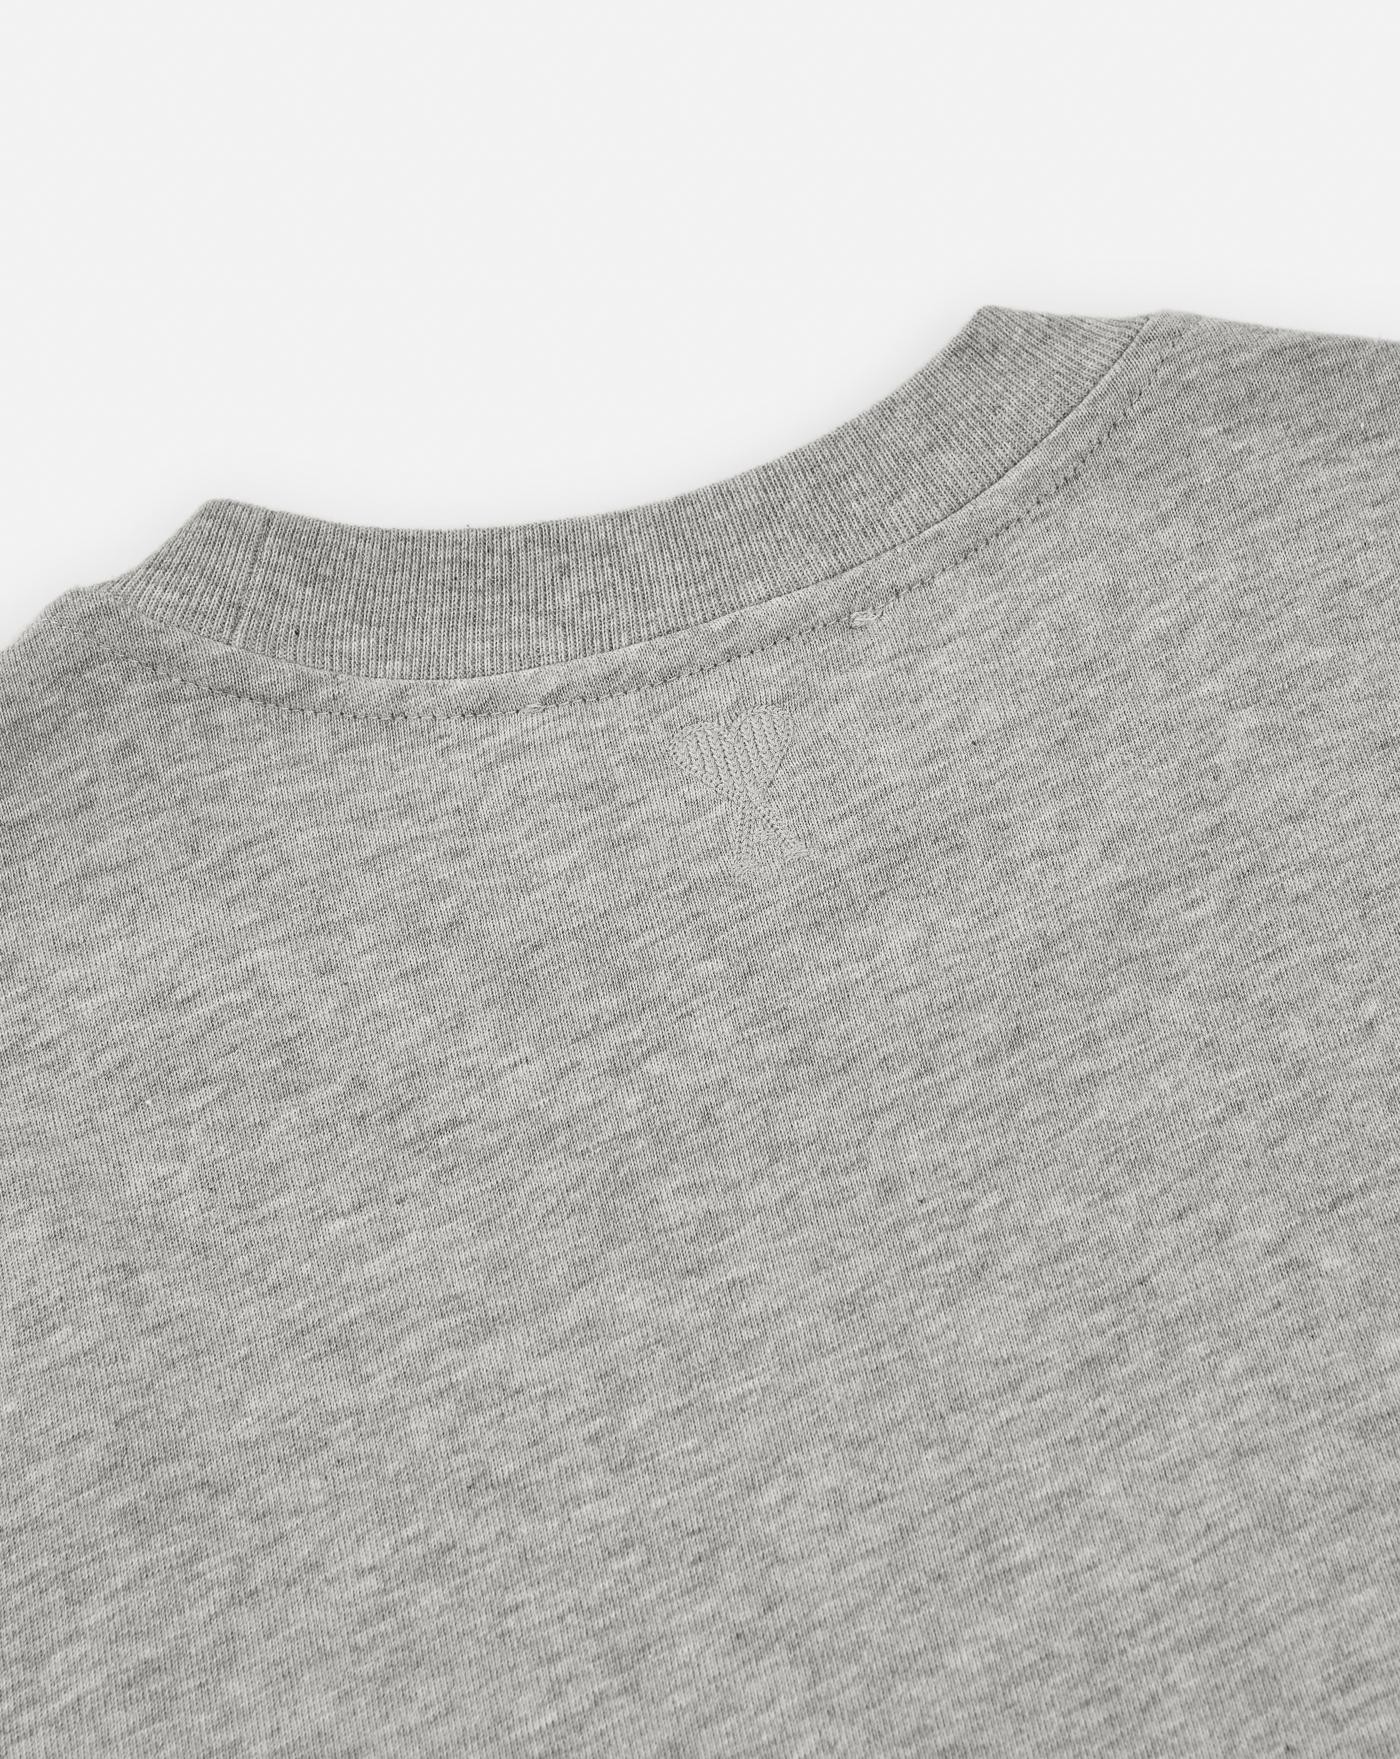 ami-paris-camiseta-manga-larga-alexandre-mattiussi-t-shirt-grey-gris-4